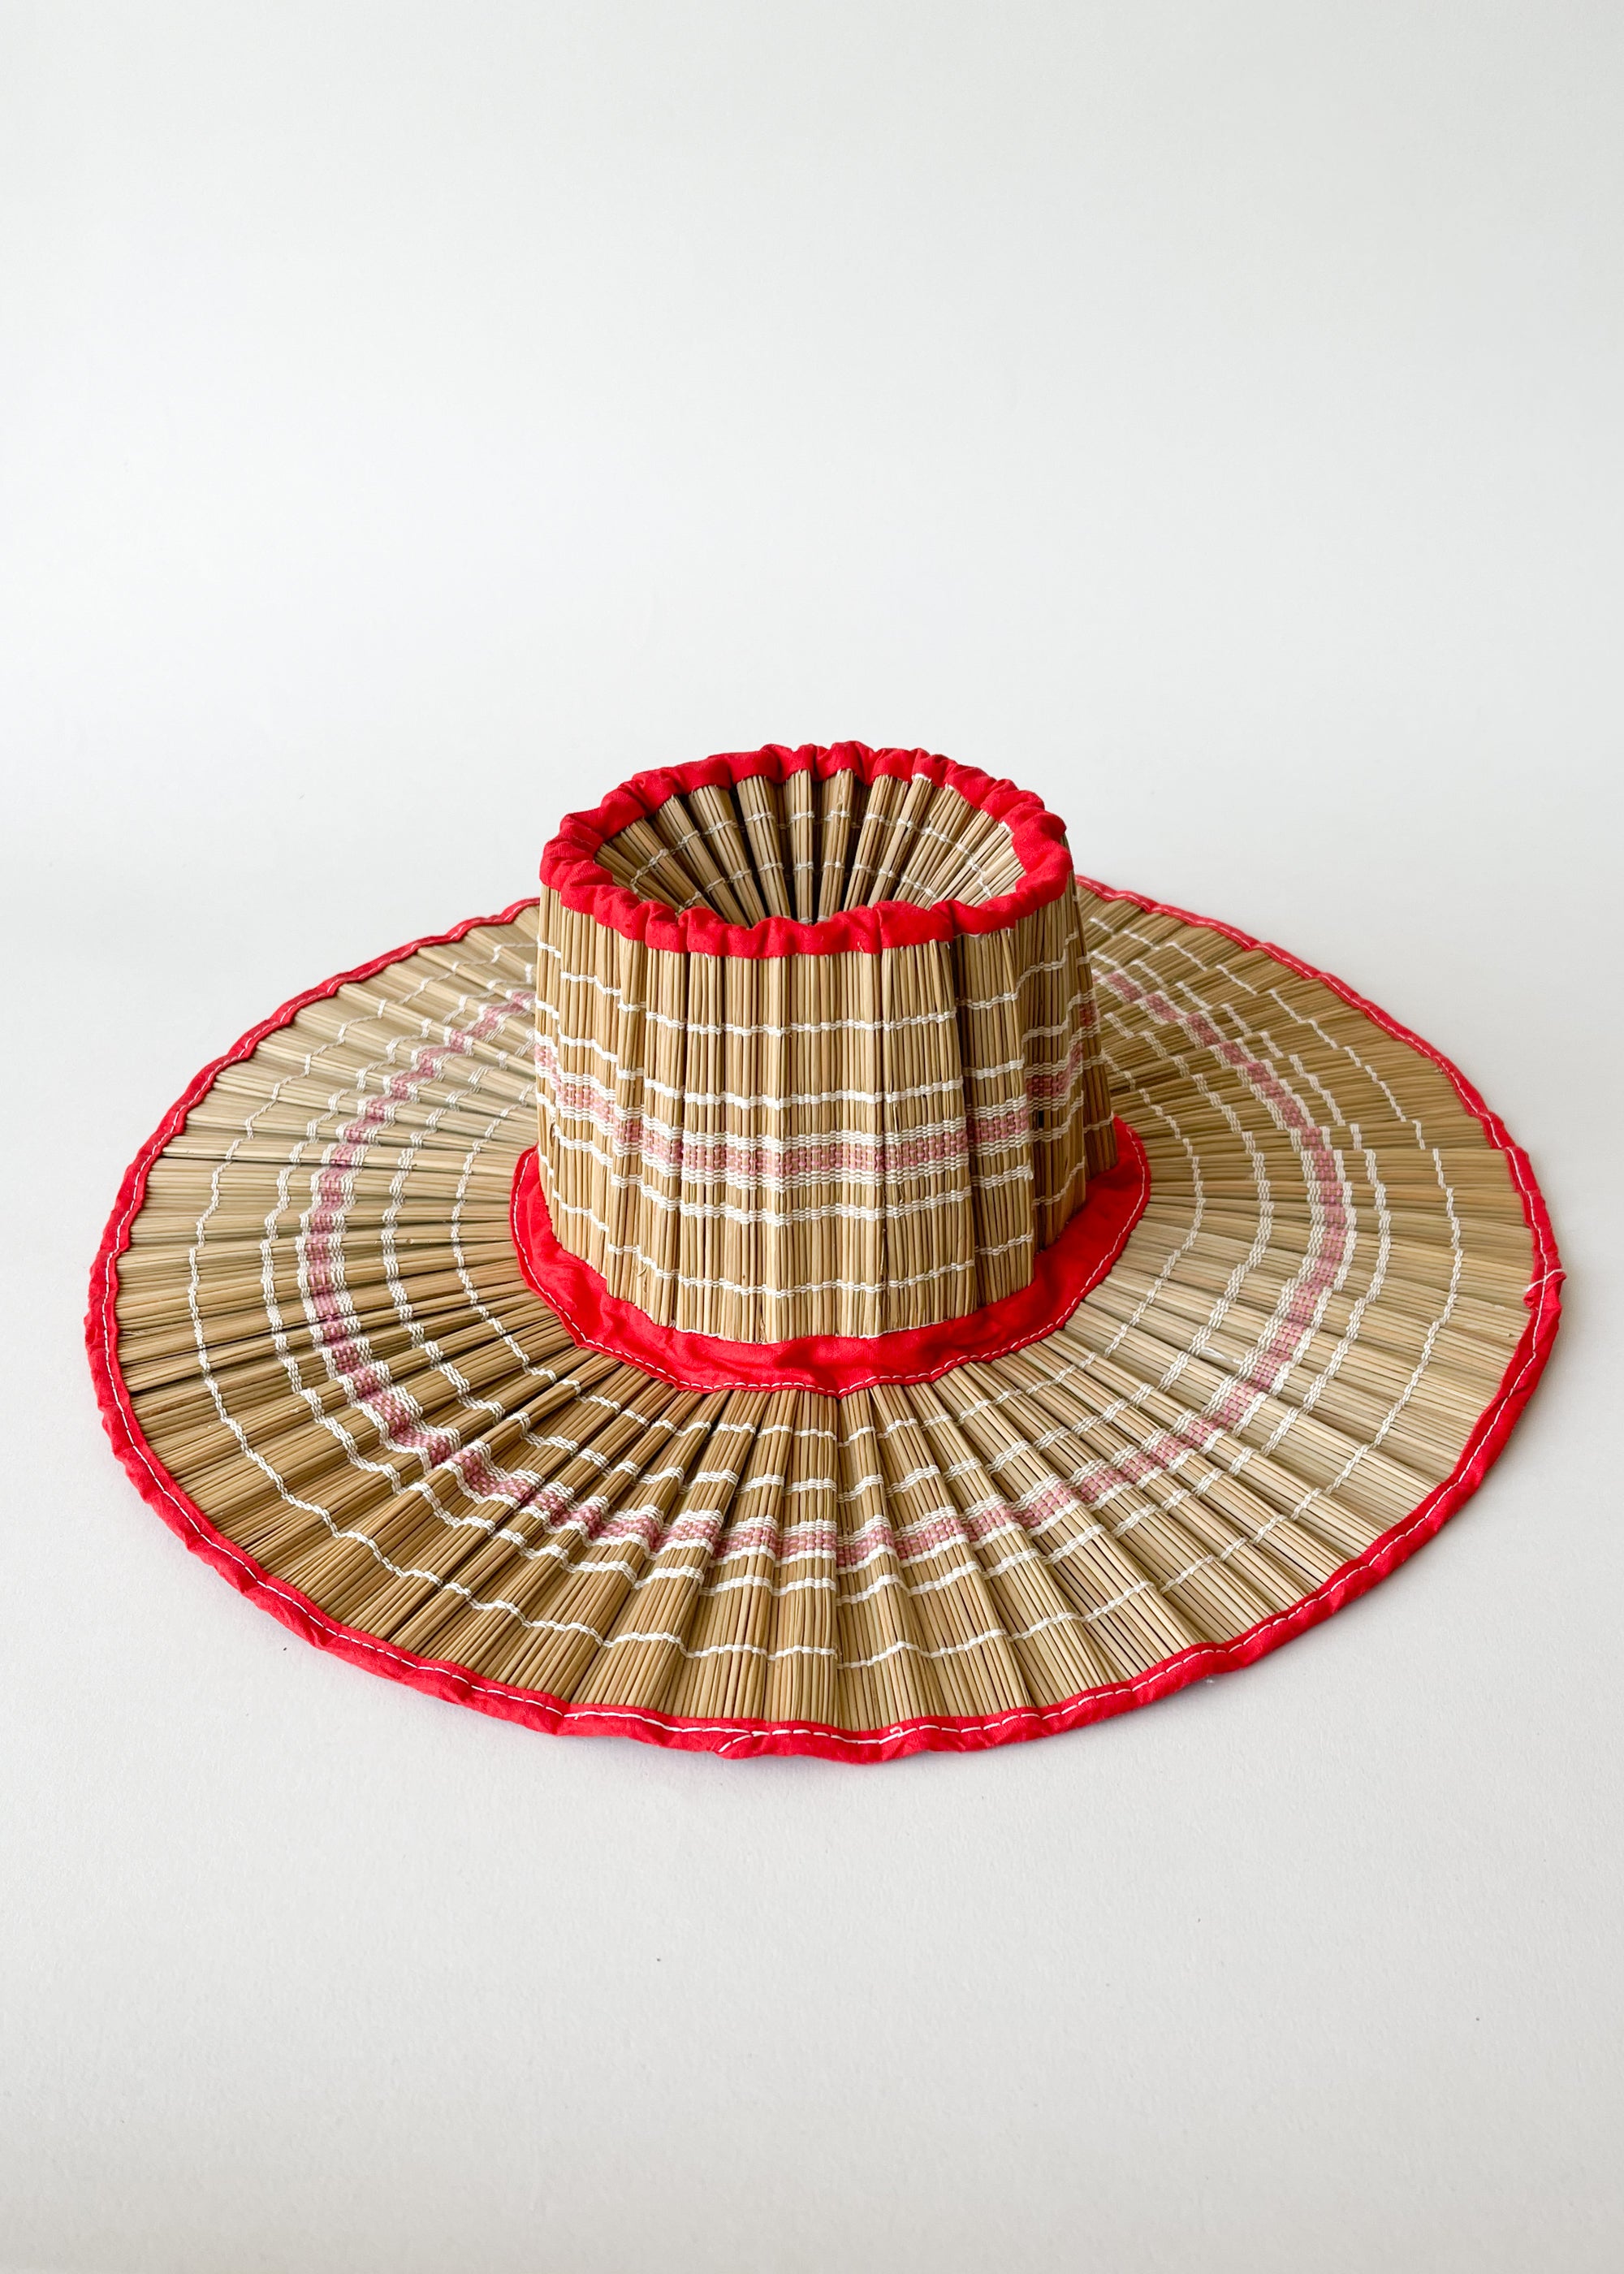 Antique Roform Folding Hat in Original Packaging